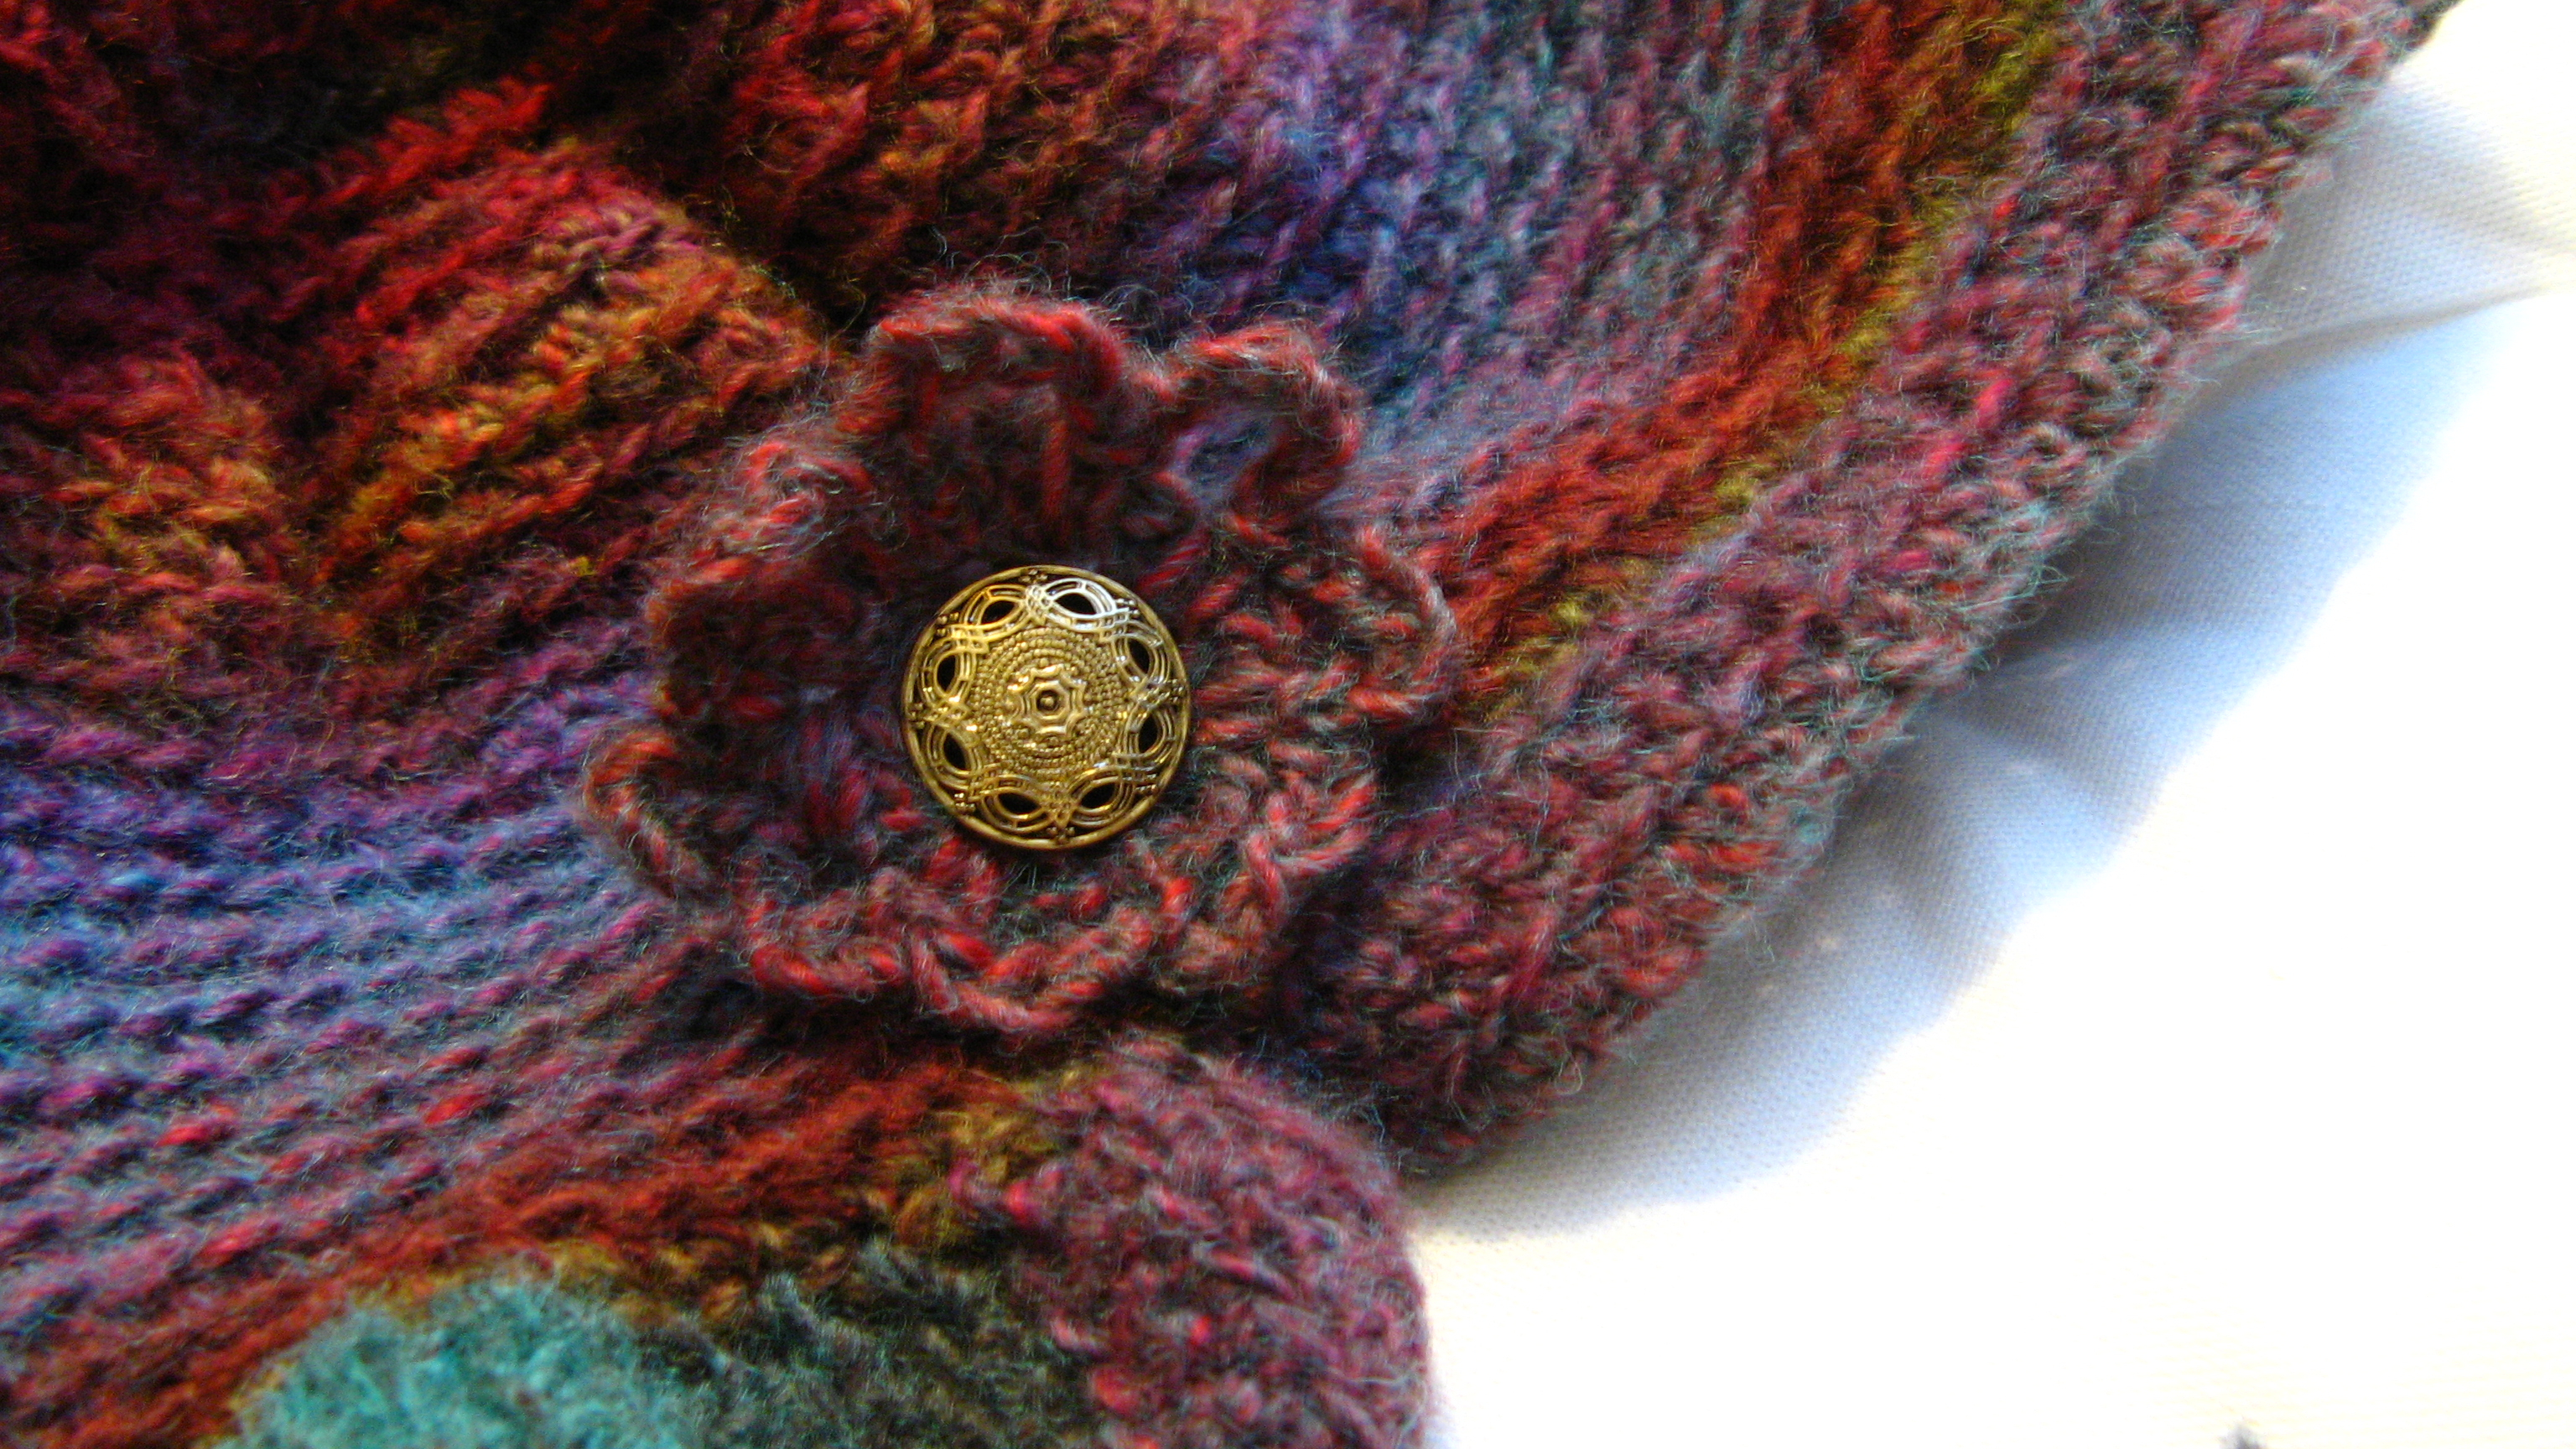 List of Lion Brand Amazing Yarn Crochet Patterns Original Crochet Design Handmade Wool Hat With Flower And Gold